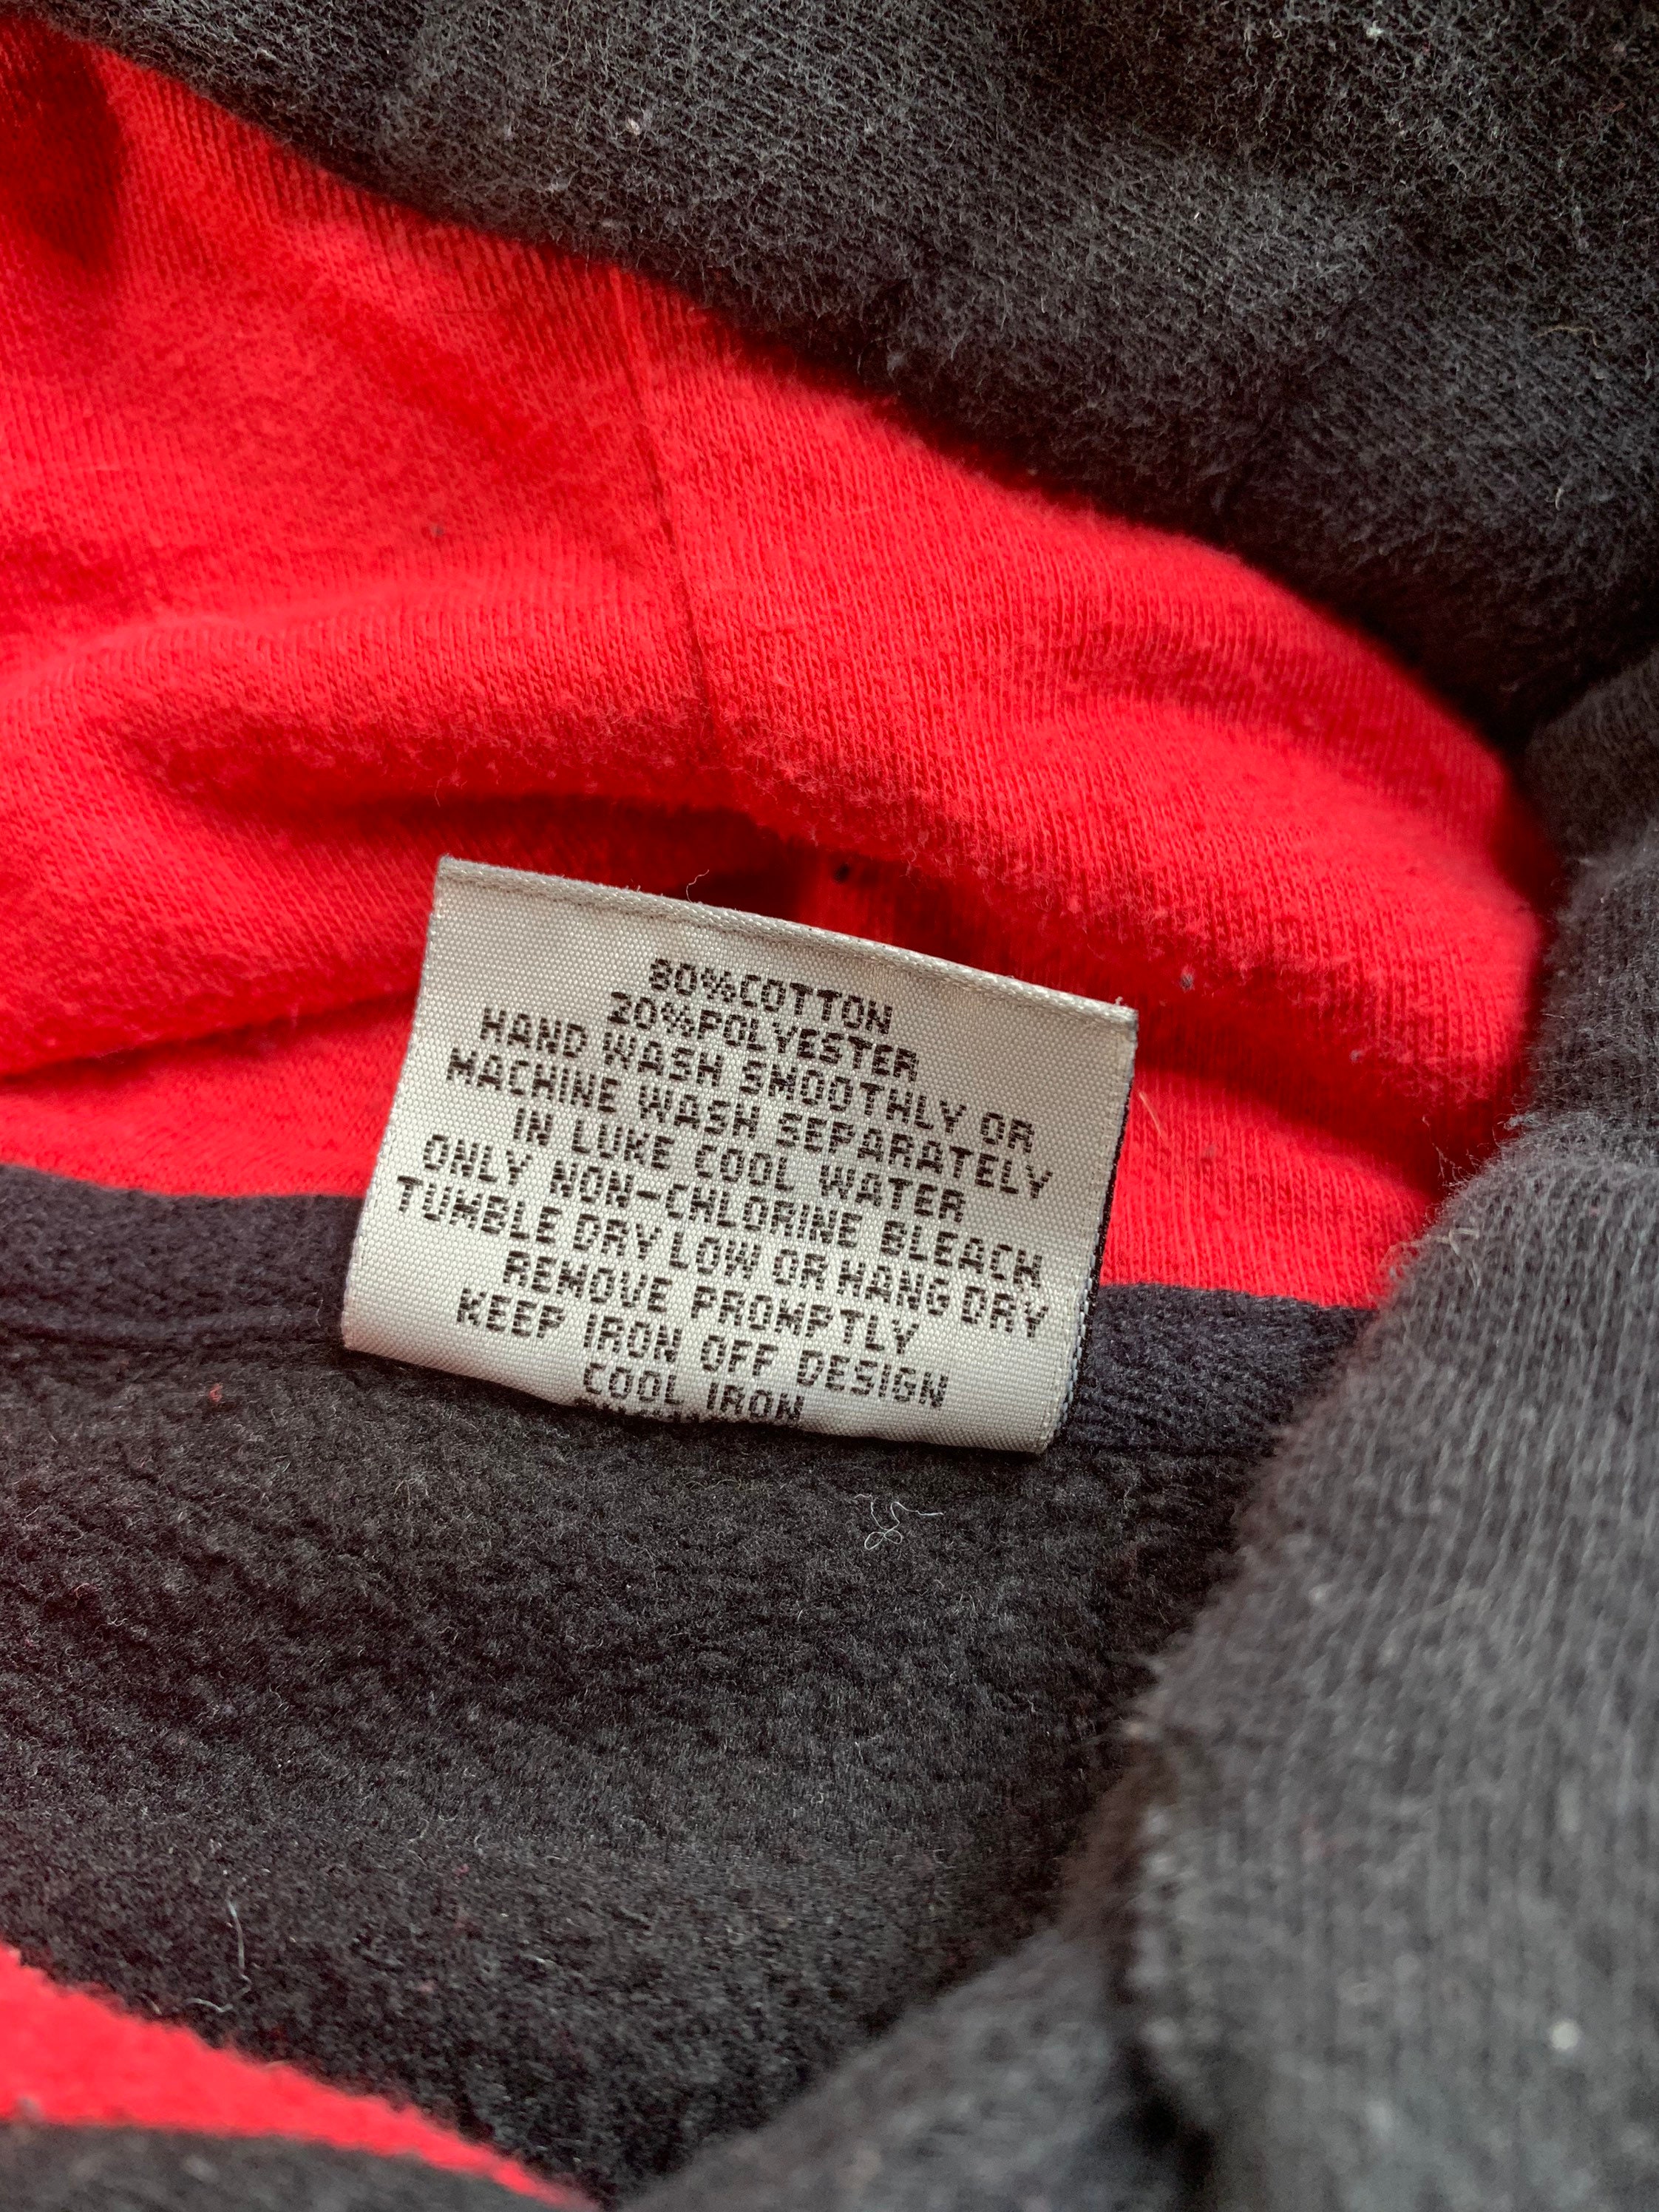 Louisville Cardinals Hoodie Sweatshirt Size XL Quality -  Israel